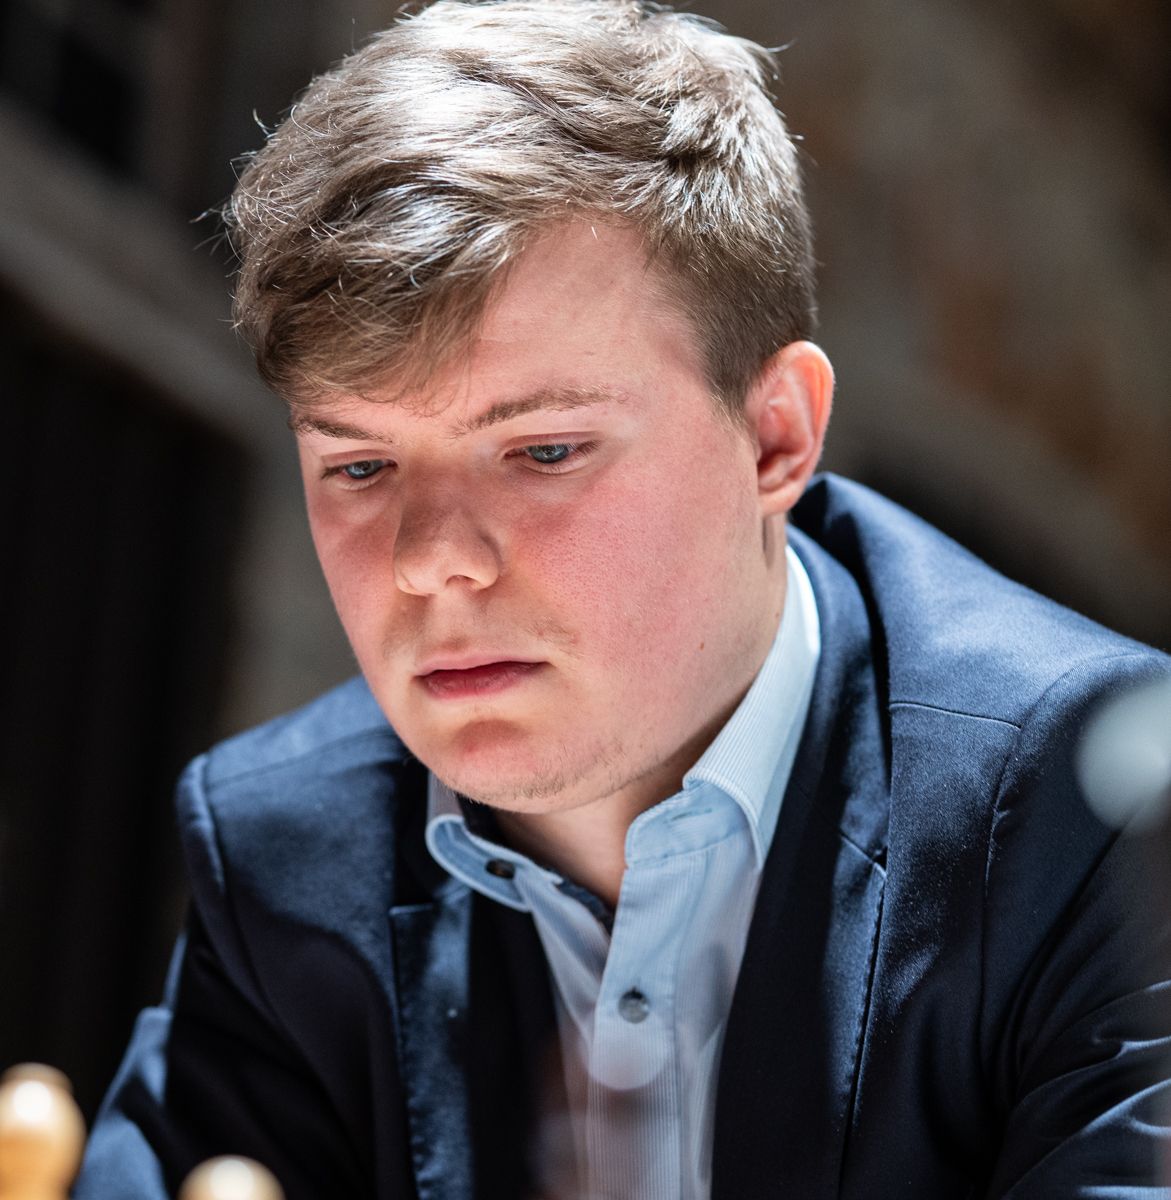 FIDE  Grand Swiss R8: Firouzja Increases Lead, Now World #4 